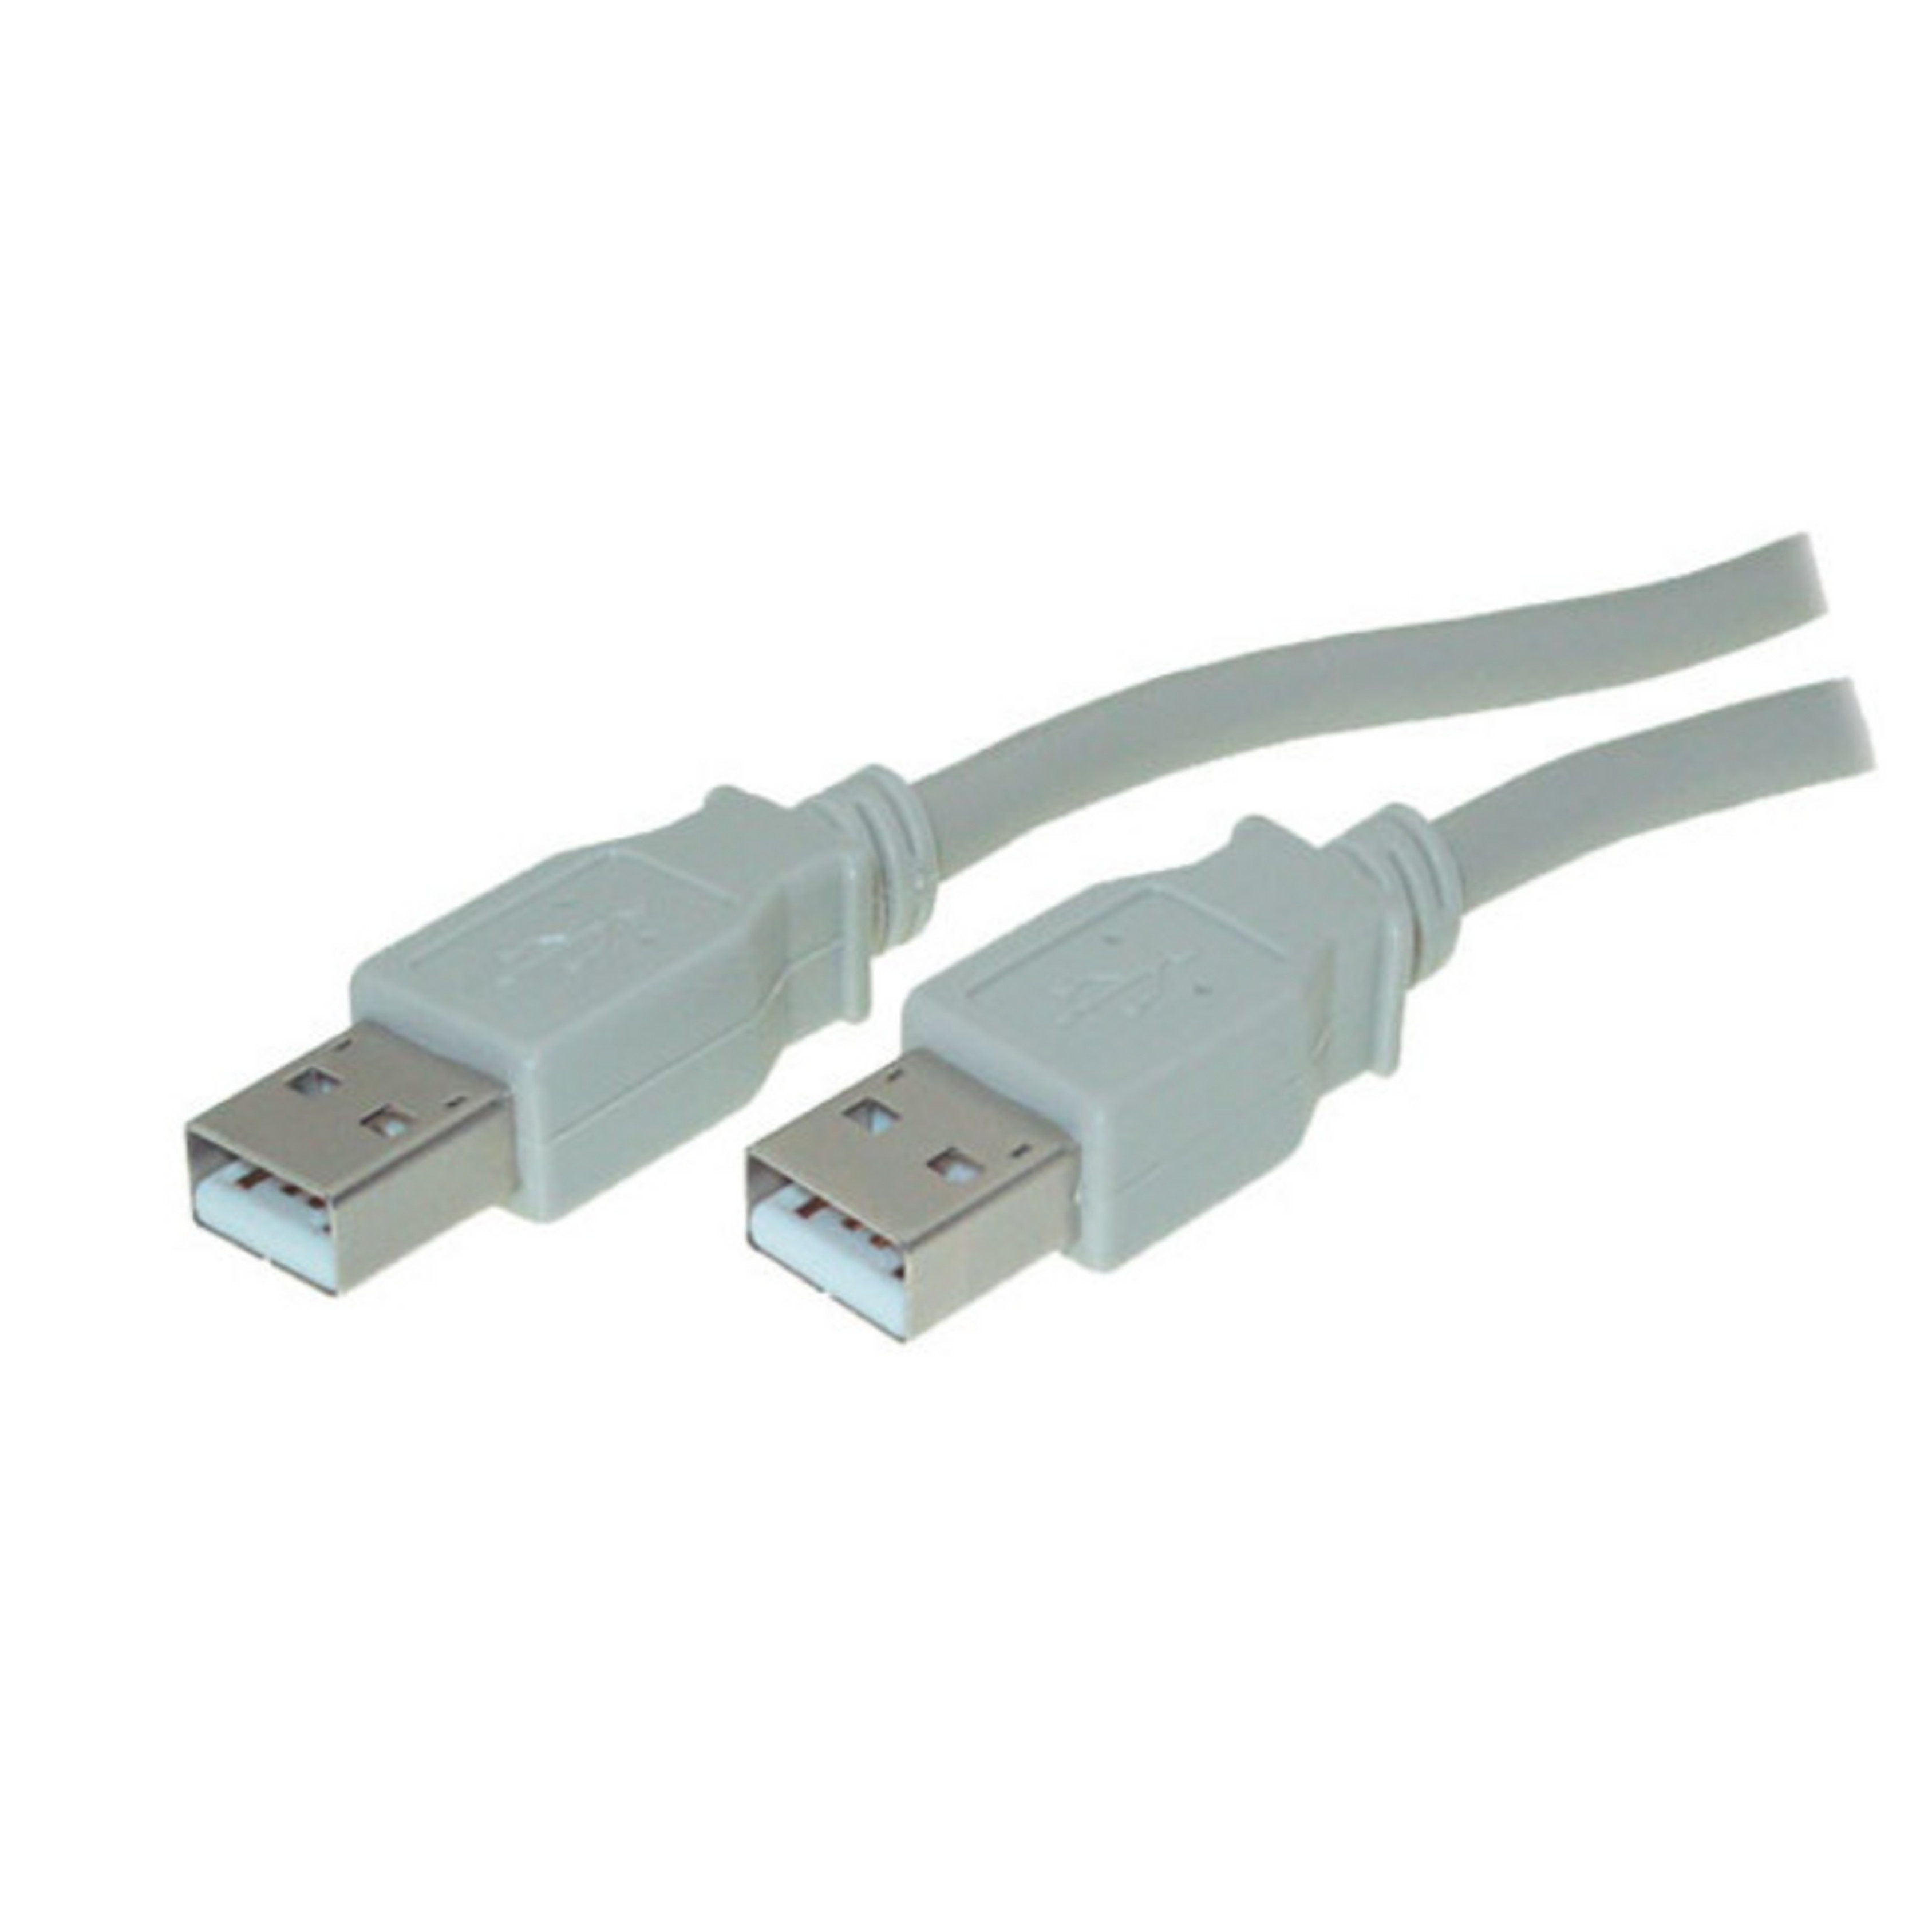 USB MAXIMUM / Stecker 5m S/CONN Stecker USB A USB CONNECTIVITY Kabel A 2.0 Kabel